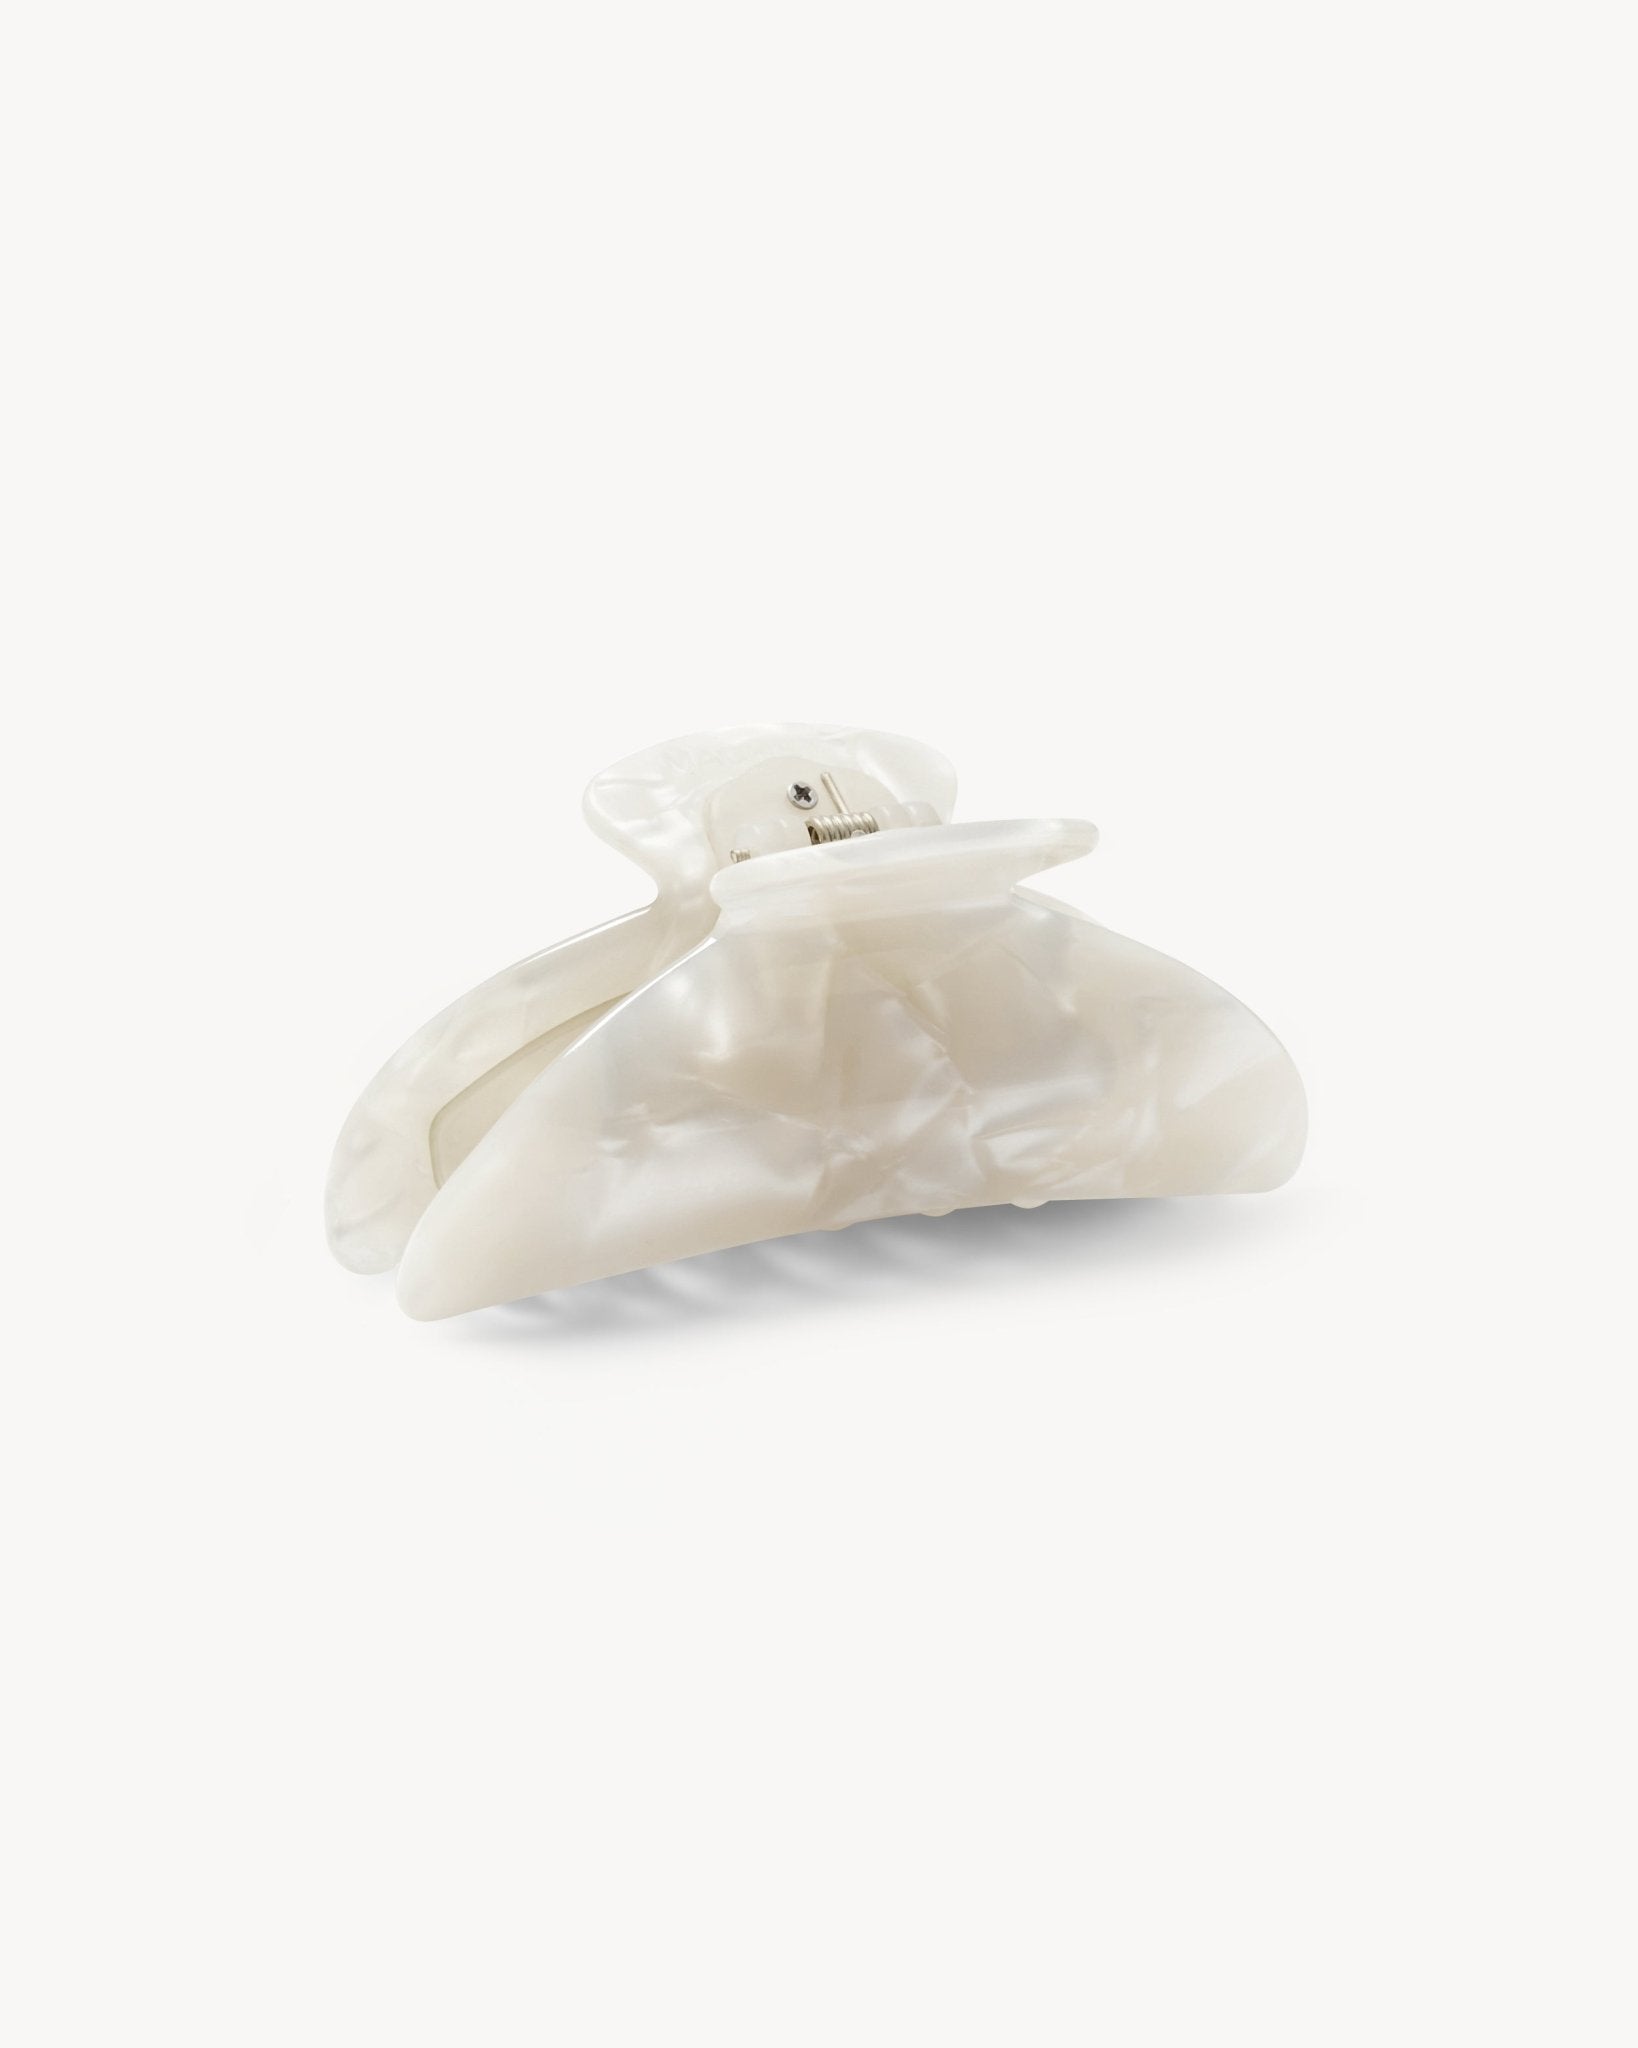 Midi Heirloom Claw in White Shell - MACHETE